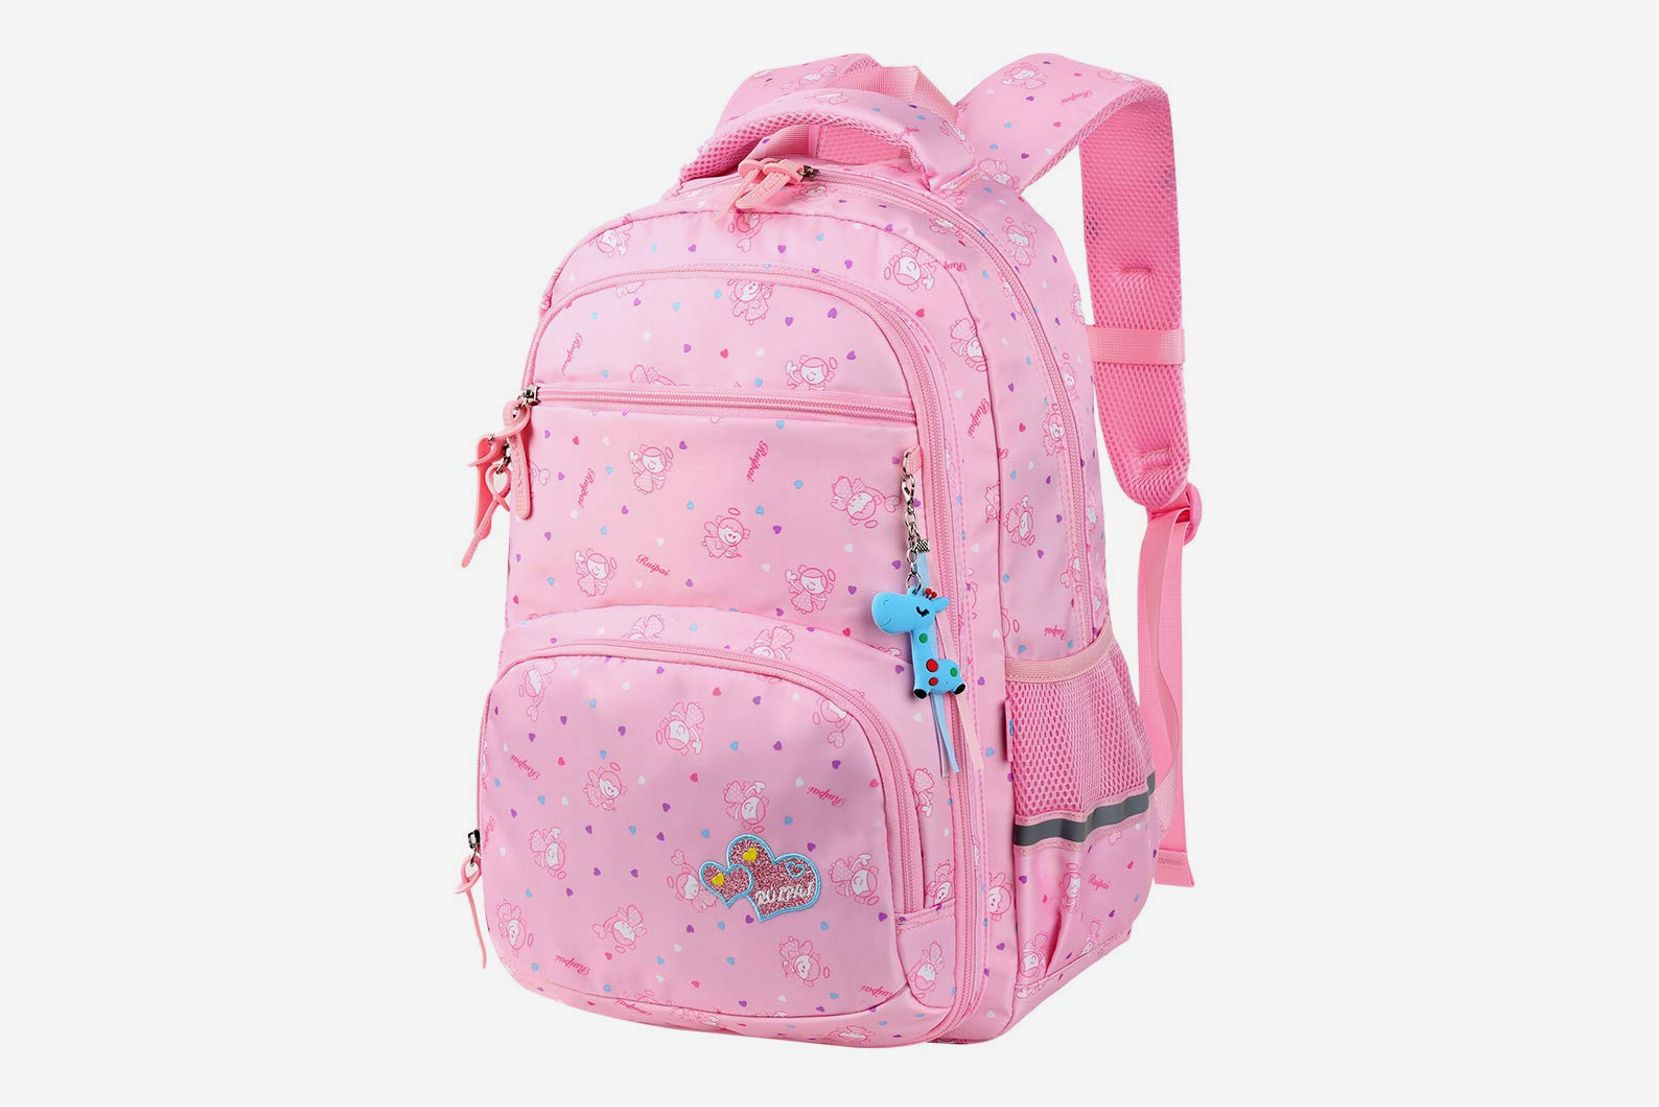 Large, Pink Backpack Purse for Women Waterproof Girls Bookbags Elementary School College Laptop Bag